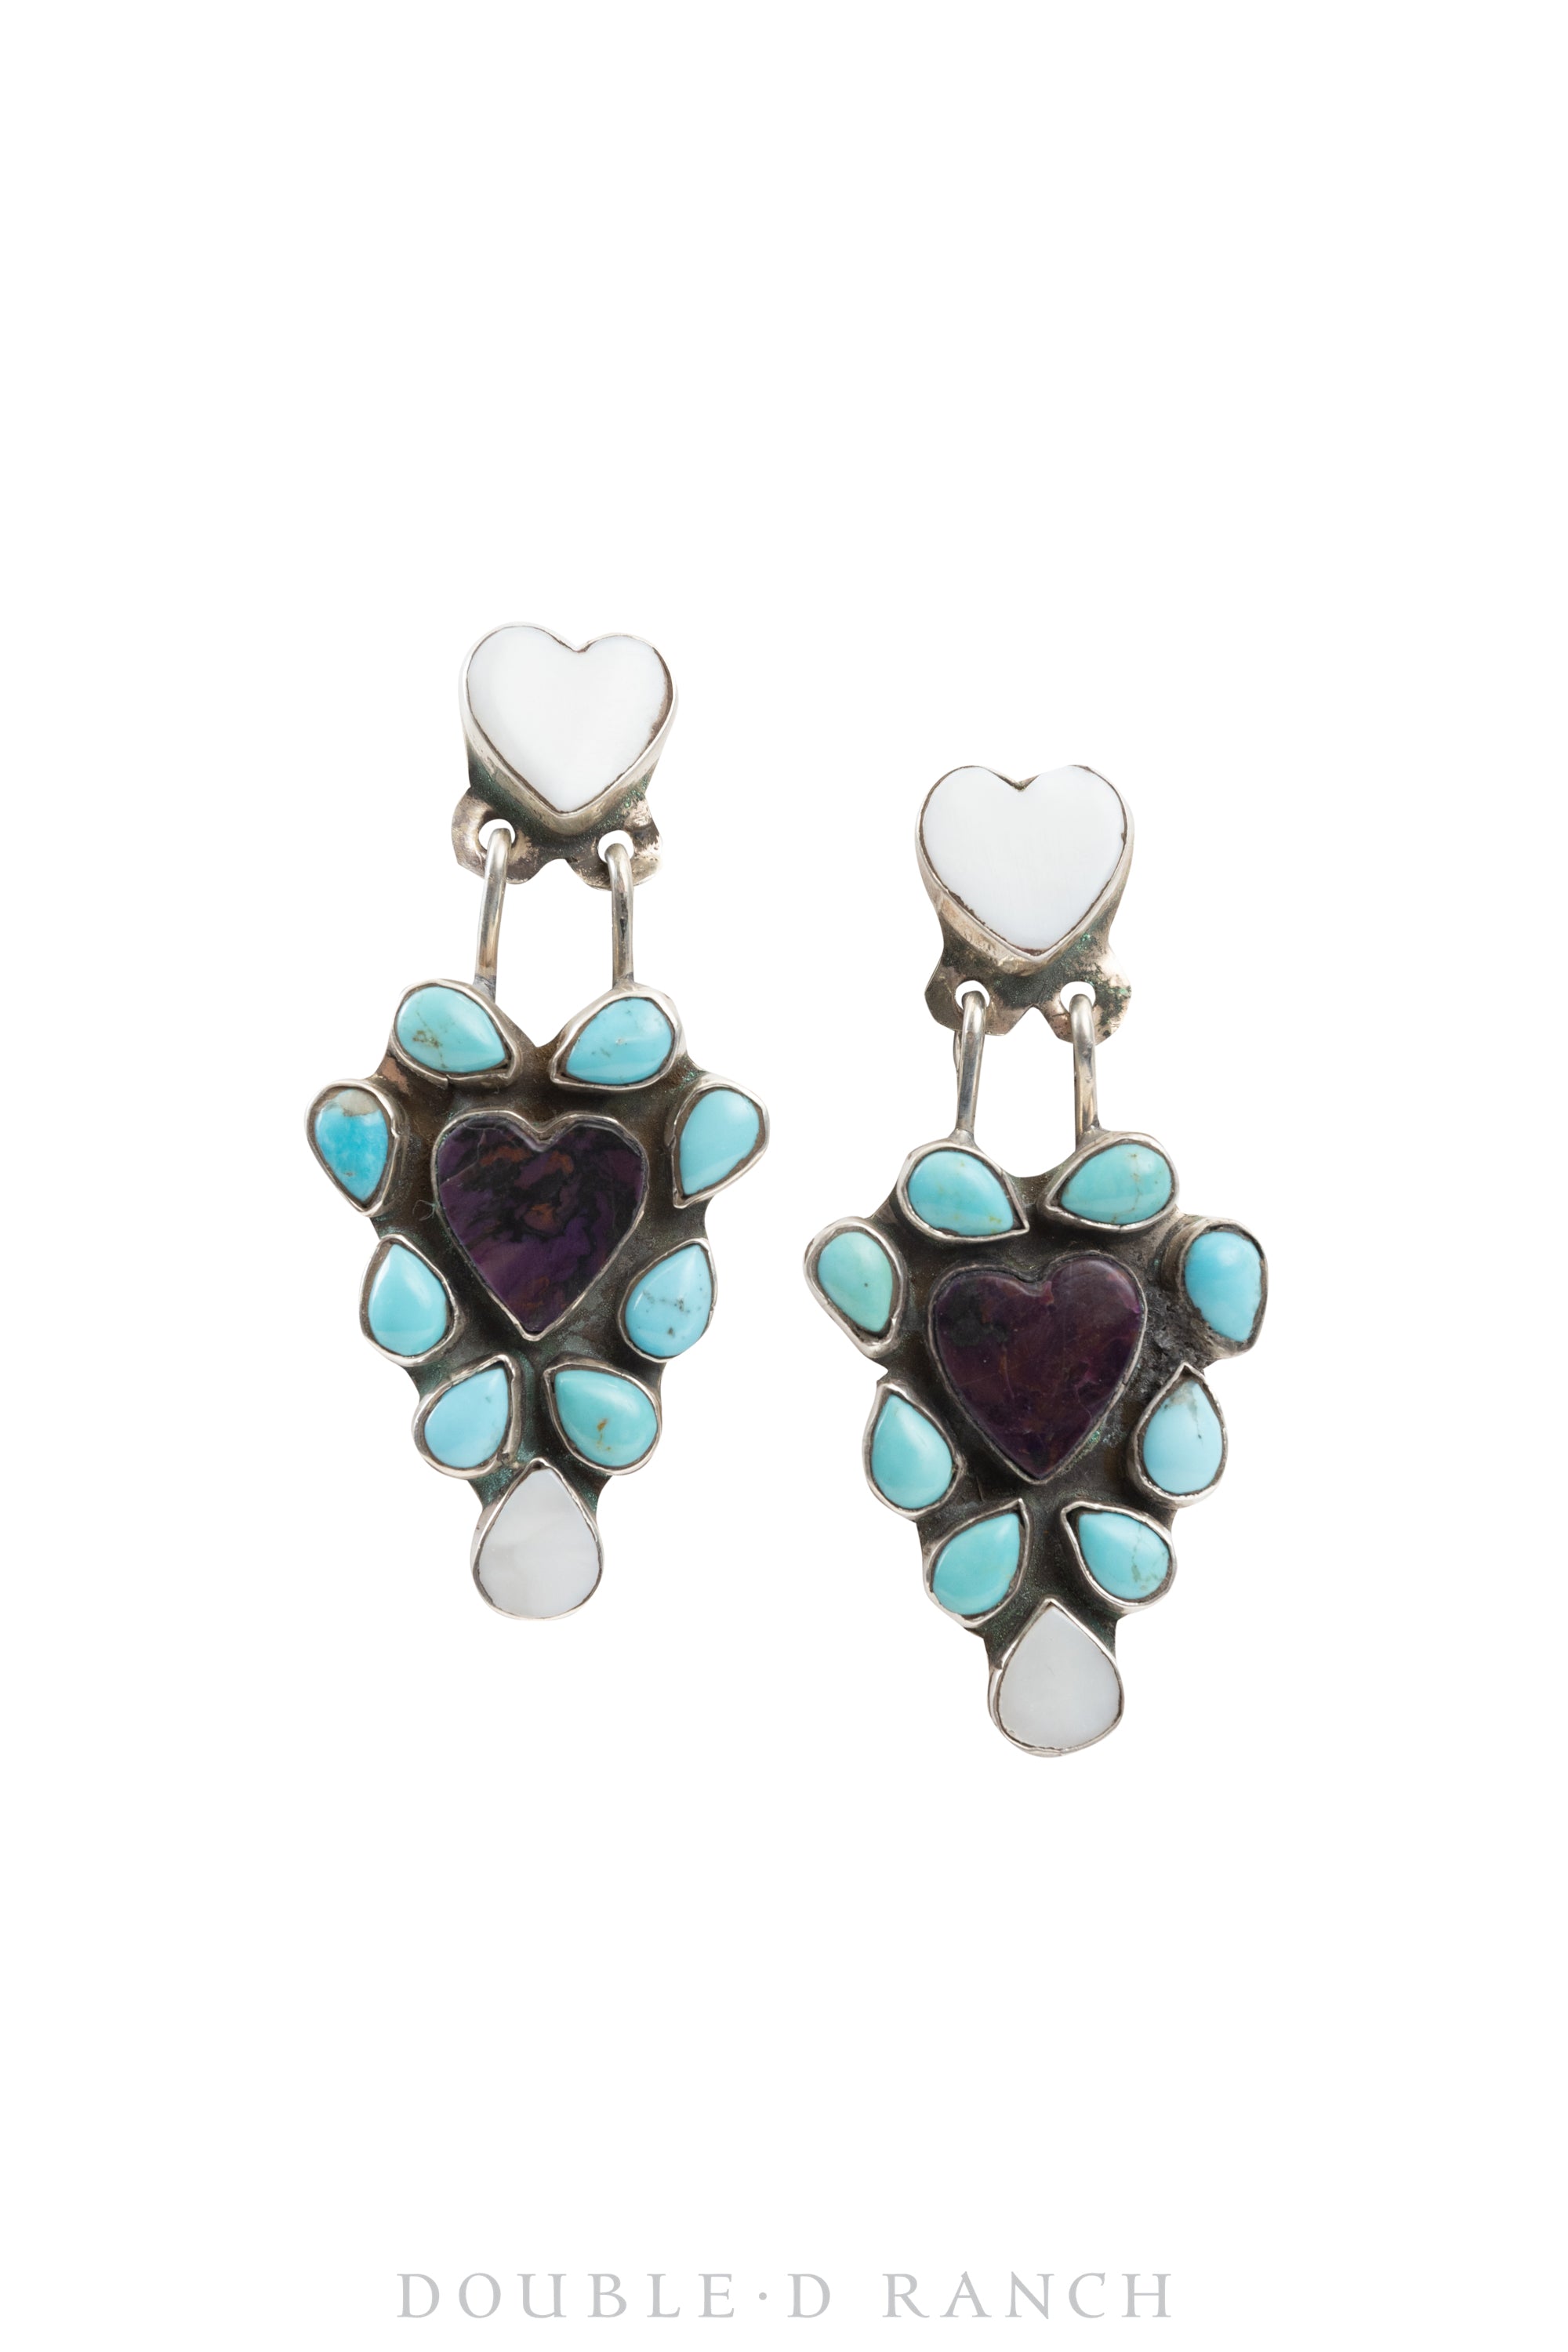 Earrings, Oscar Betz, Chandelier, Turquoise, Opal & Purple Spiny Oyster, Hallmark, Contemporary, 1587